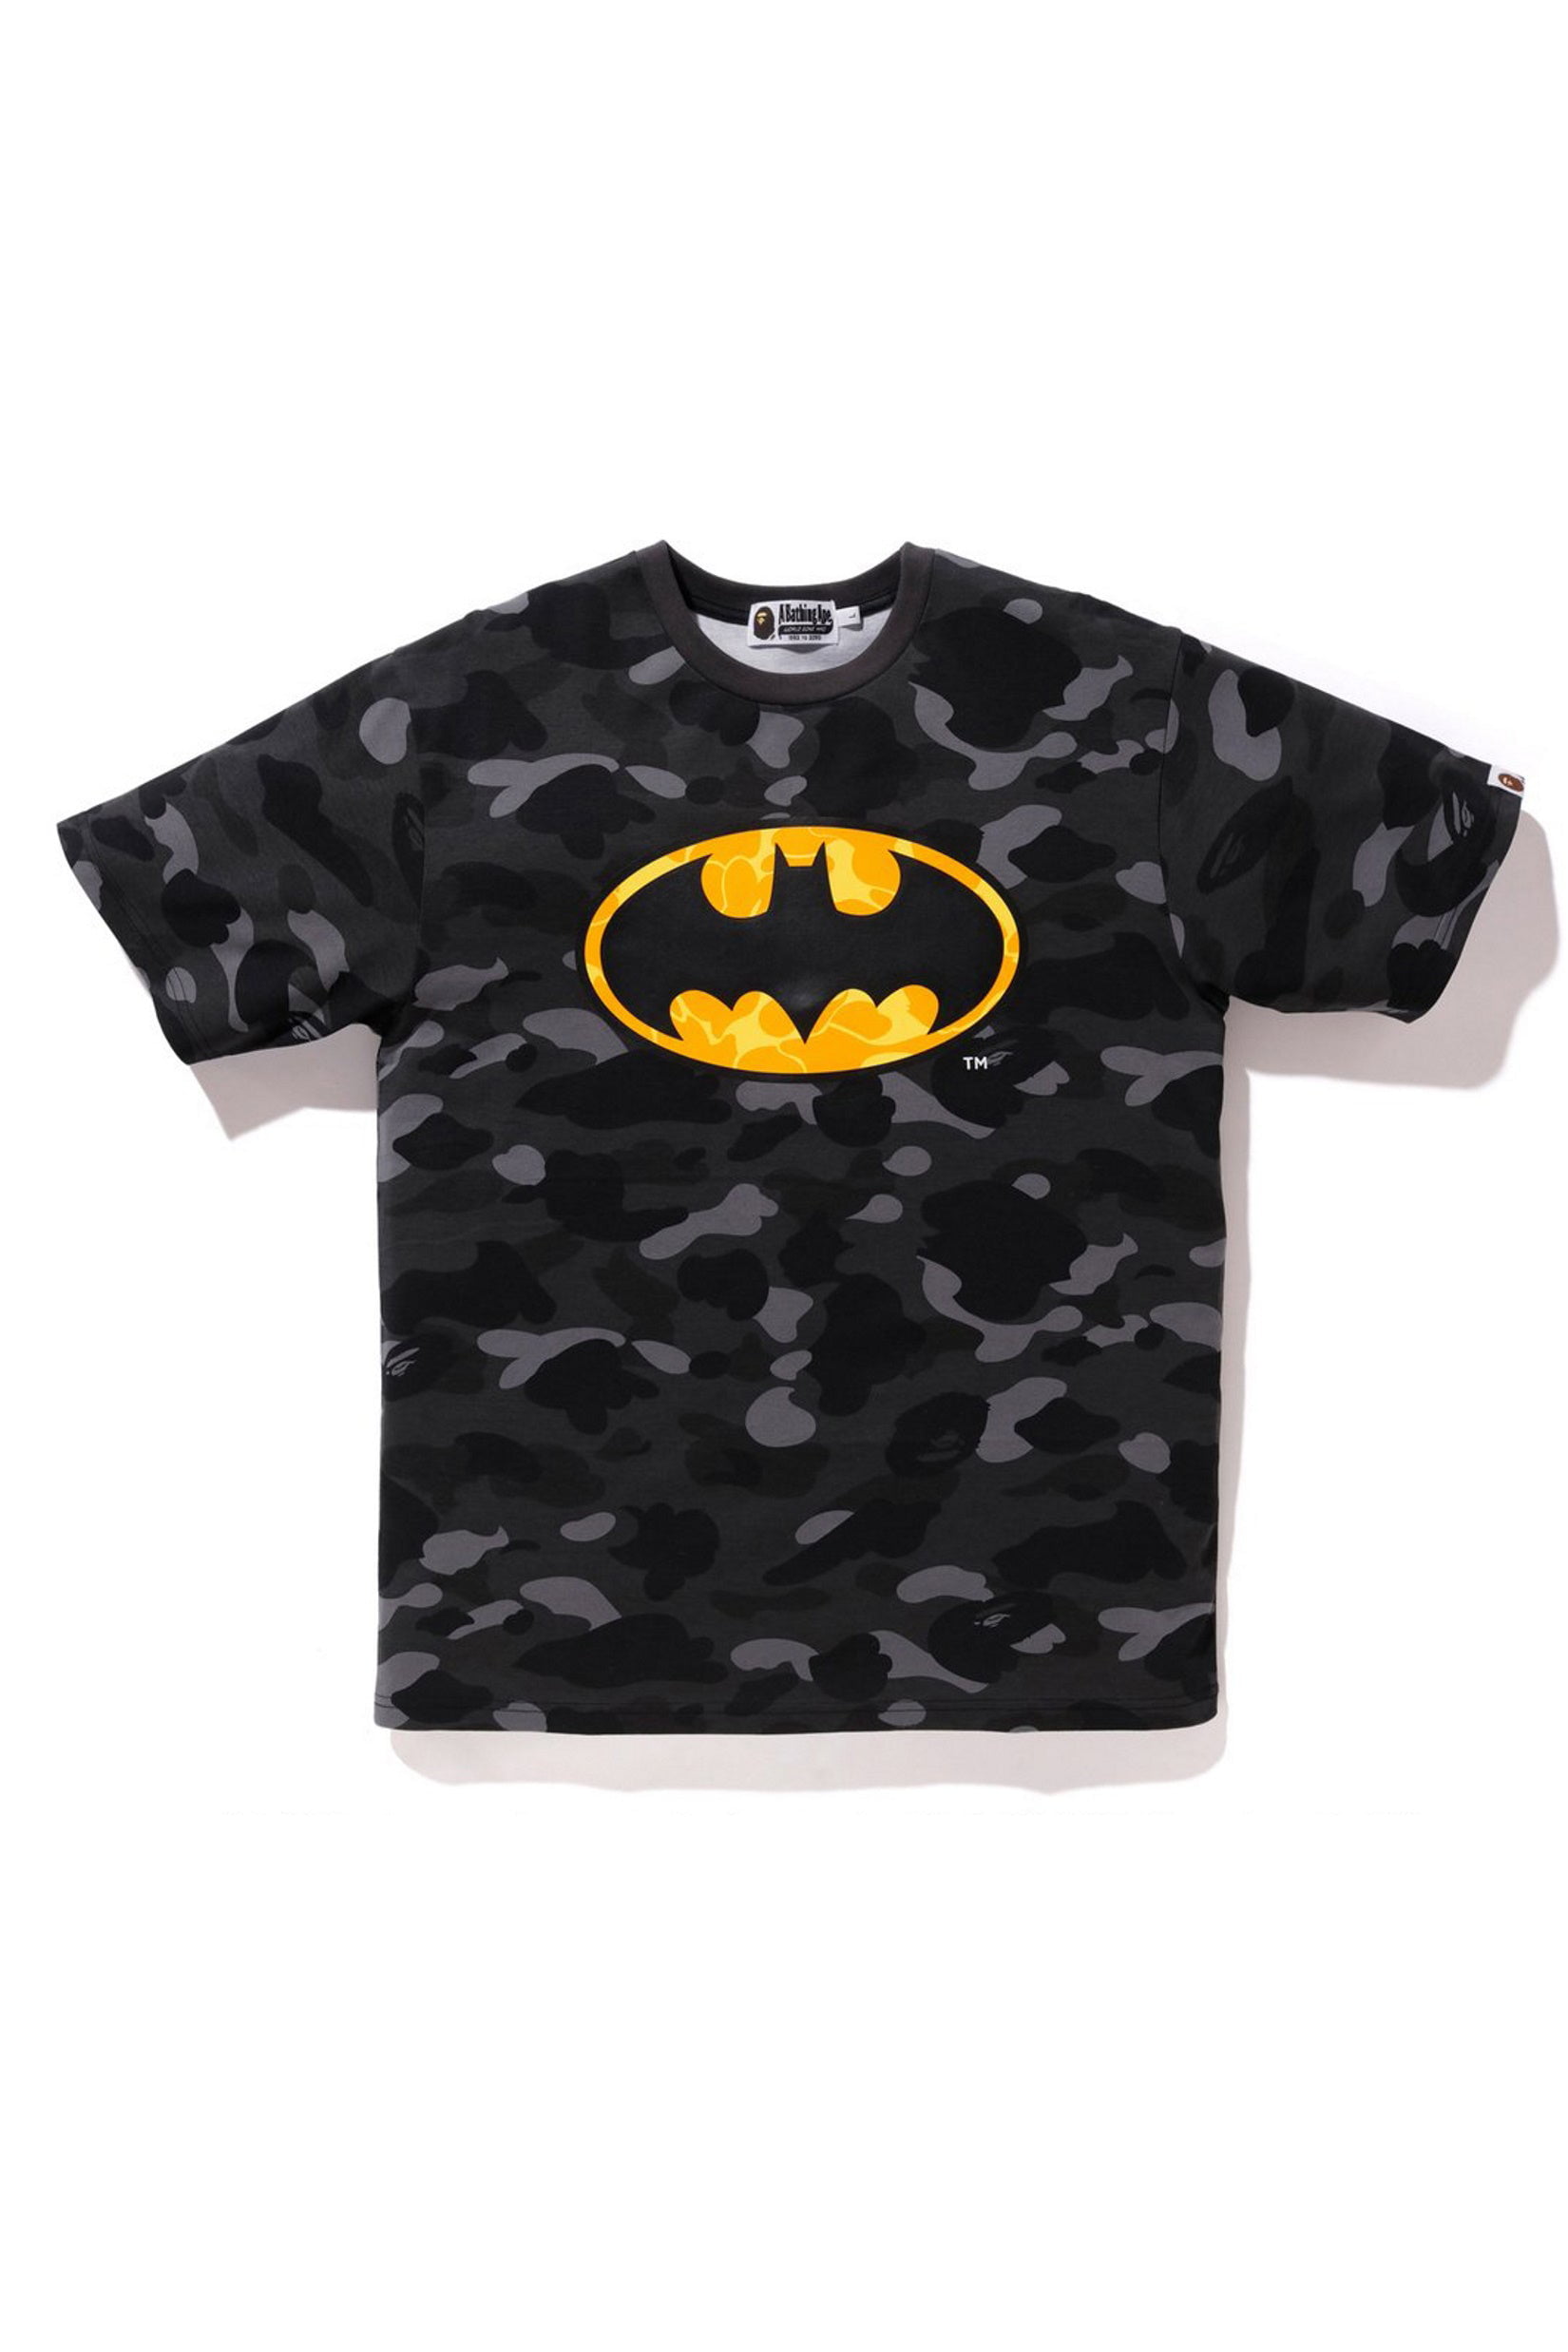 Buy BAPE x DC Batman Color Camo Tee FW20 Black Online at Lowest Price in  Ubuy Nepal. 617878228